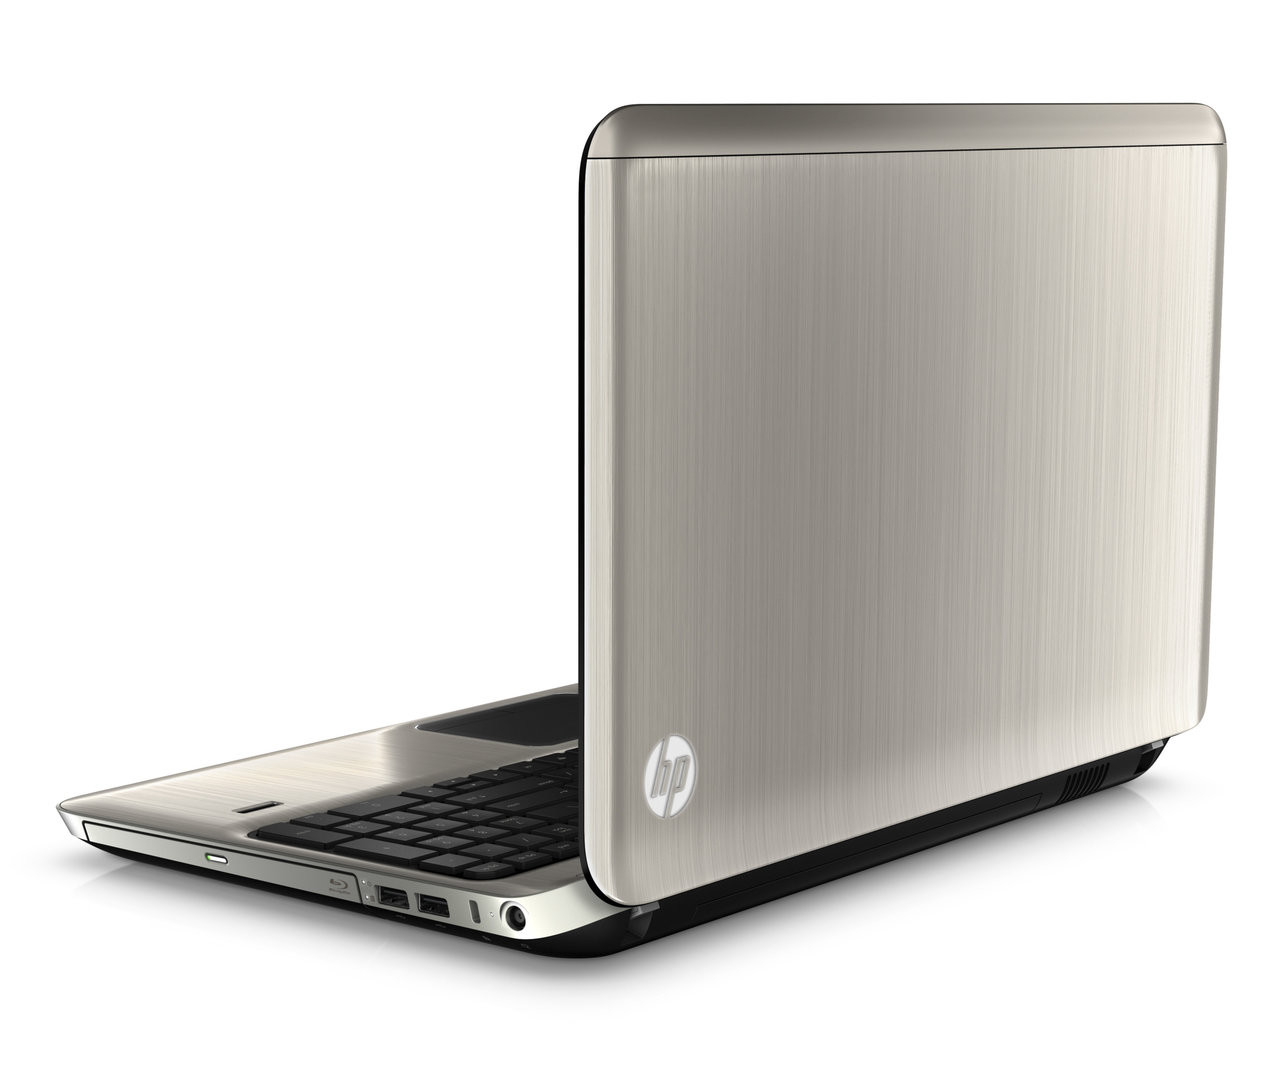 HP Pavilion dv7 Entertainment Laptop Core i5, 2017